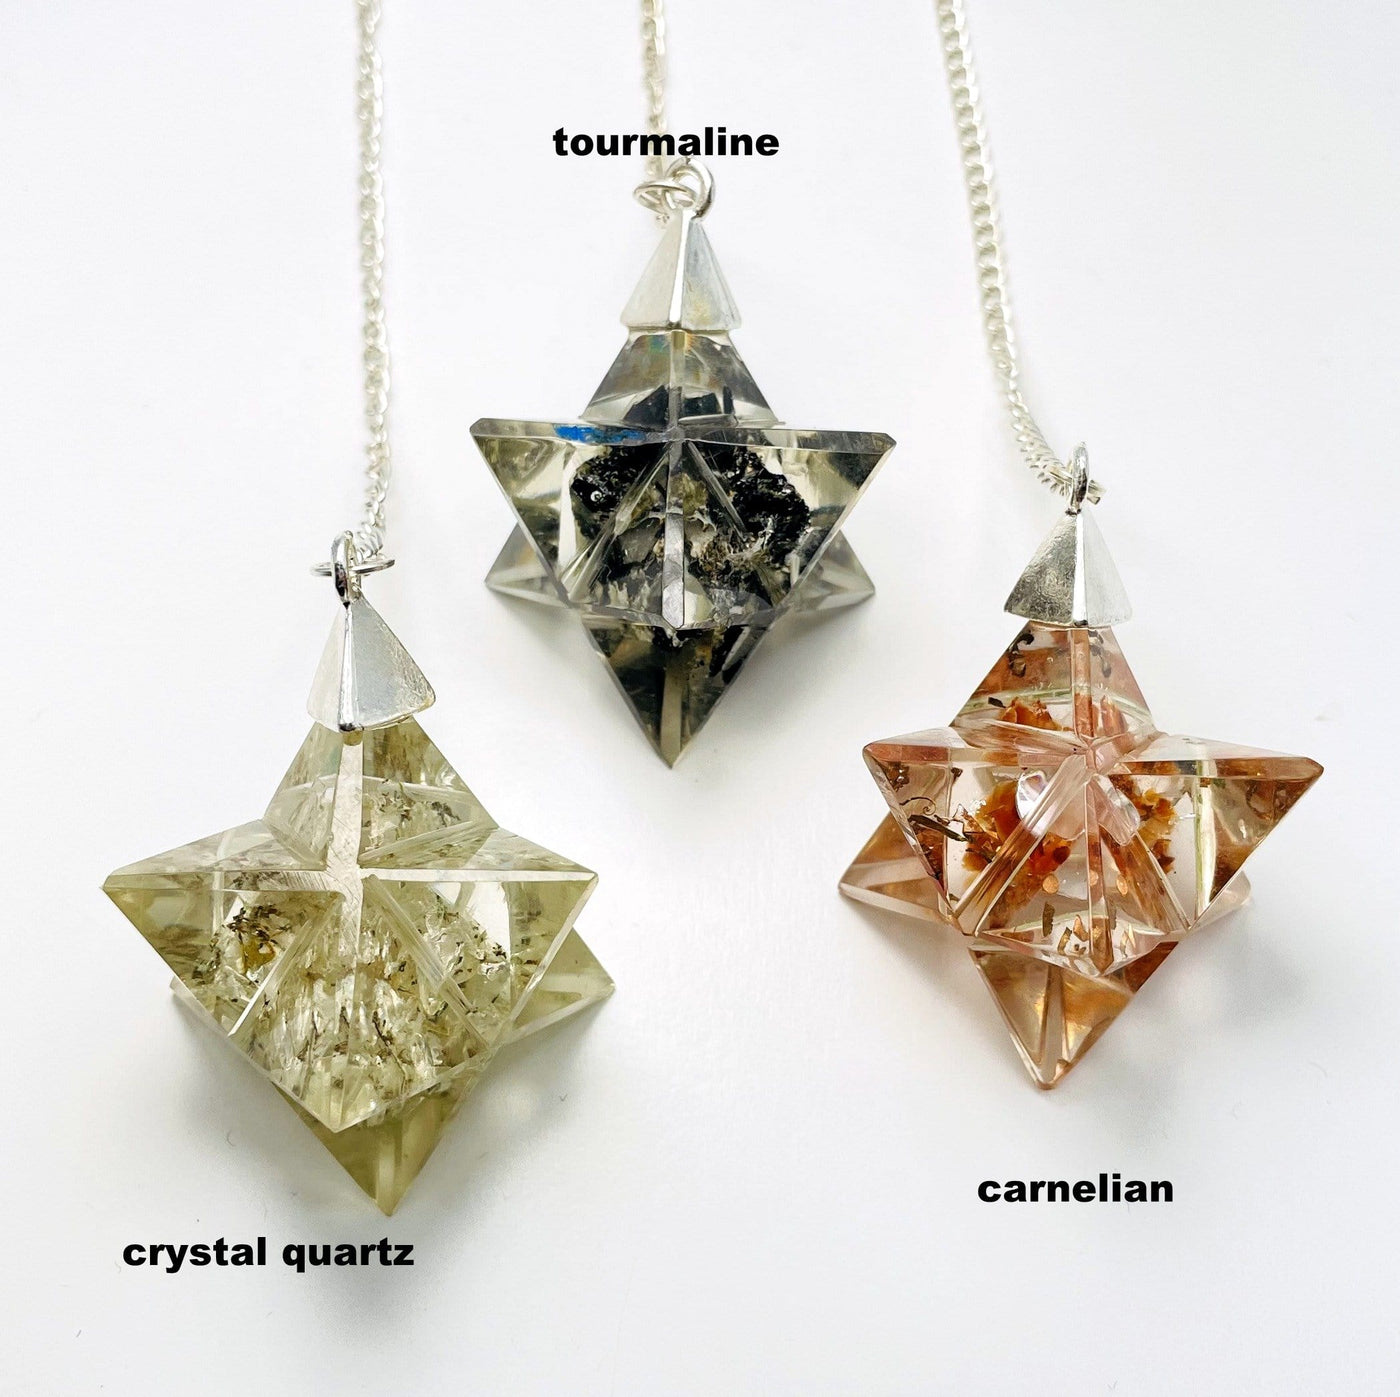 crystal quartz, tourmaline, and carnelian orgone merkaba star pendulum on white background